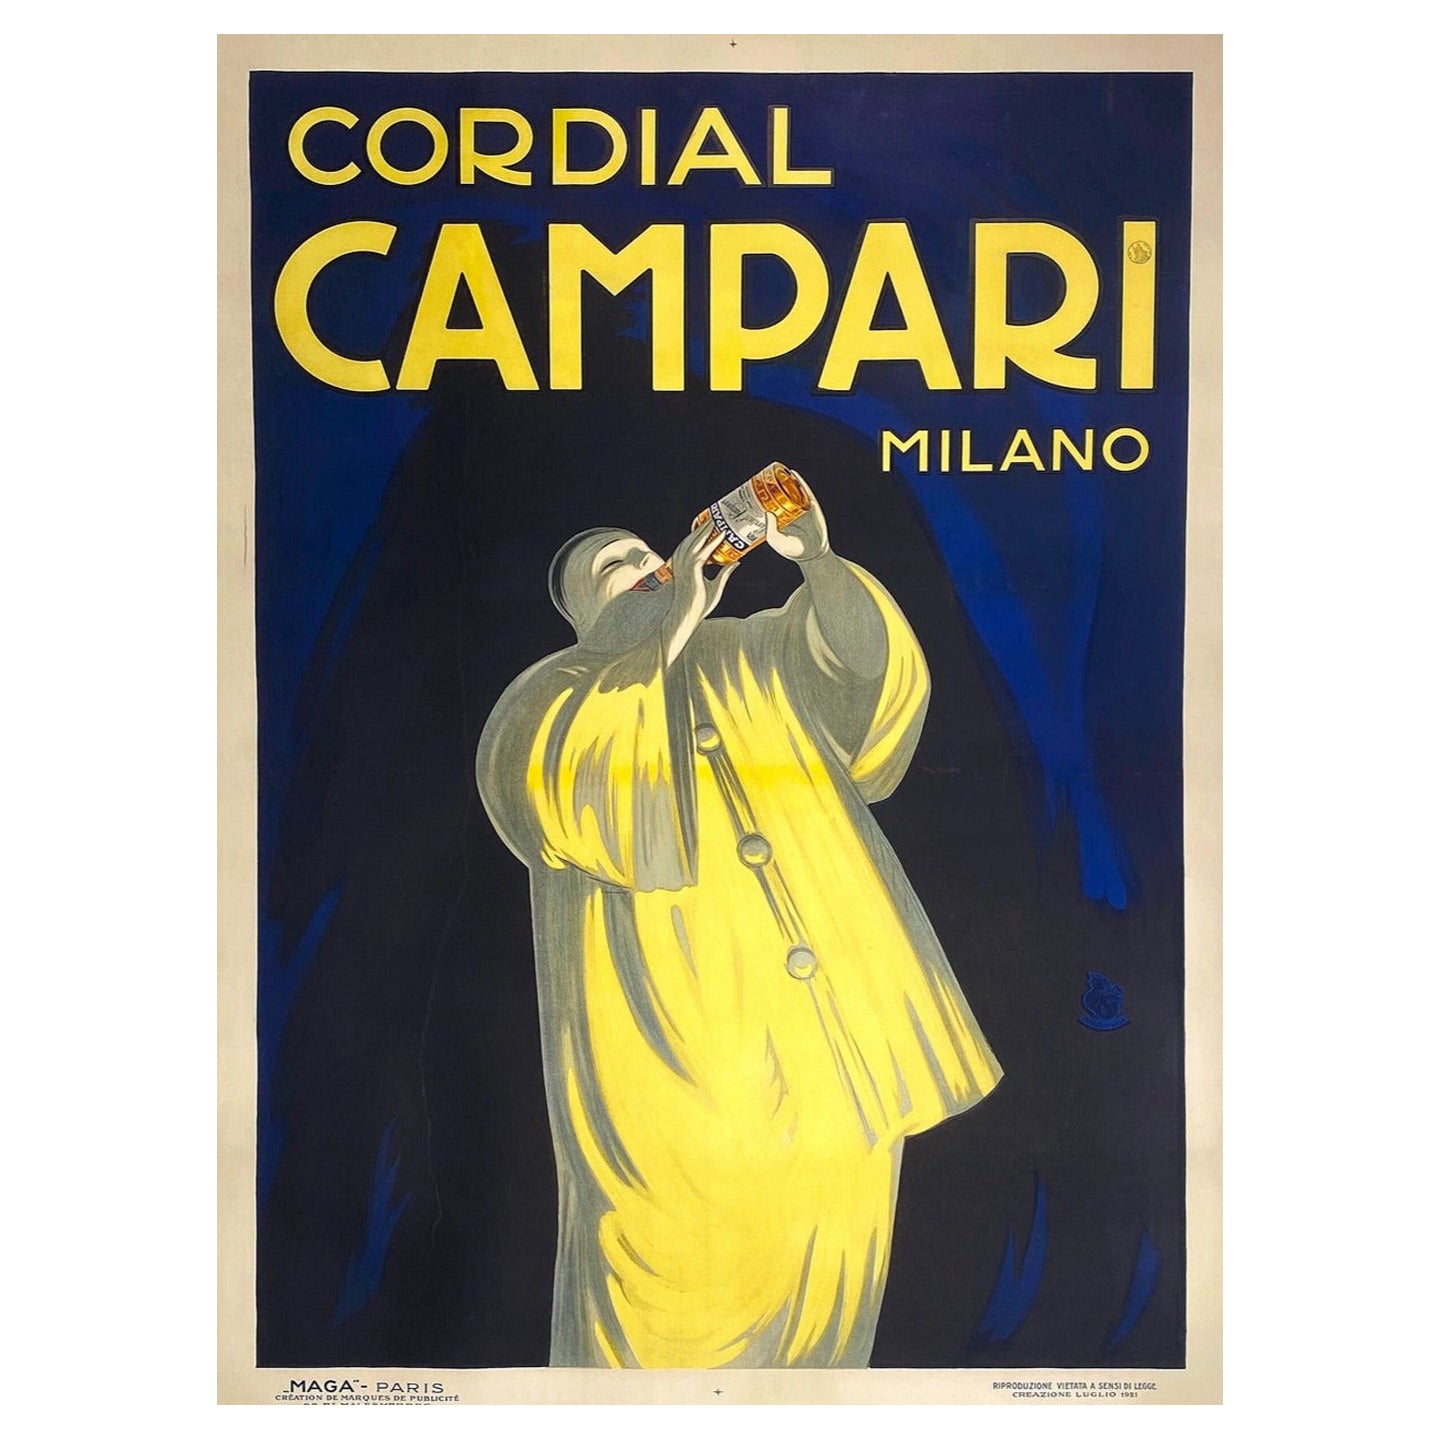 Affiche vintage d'origine Campari de 1921 - Cordial Campari Milano